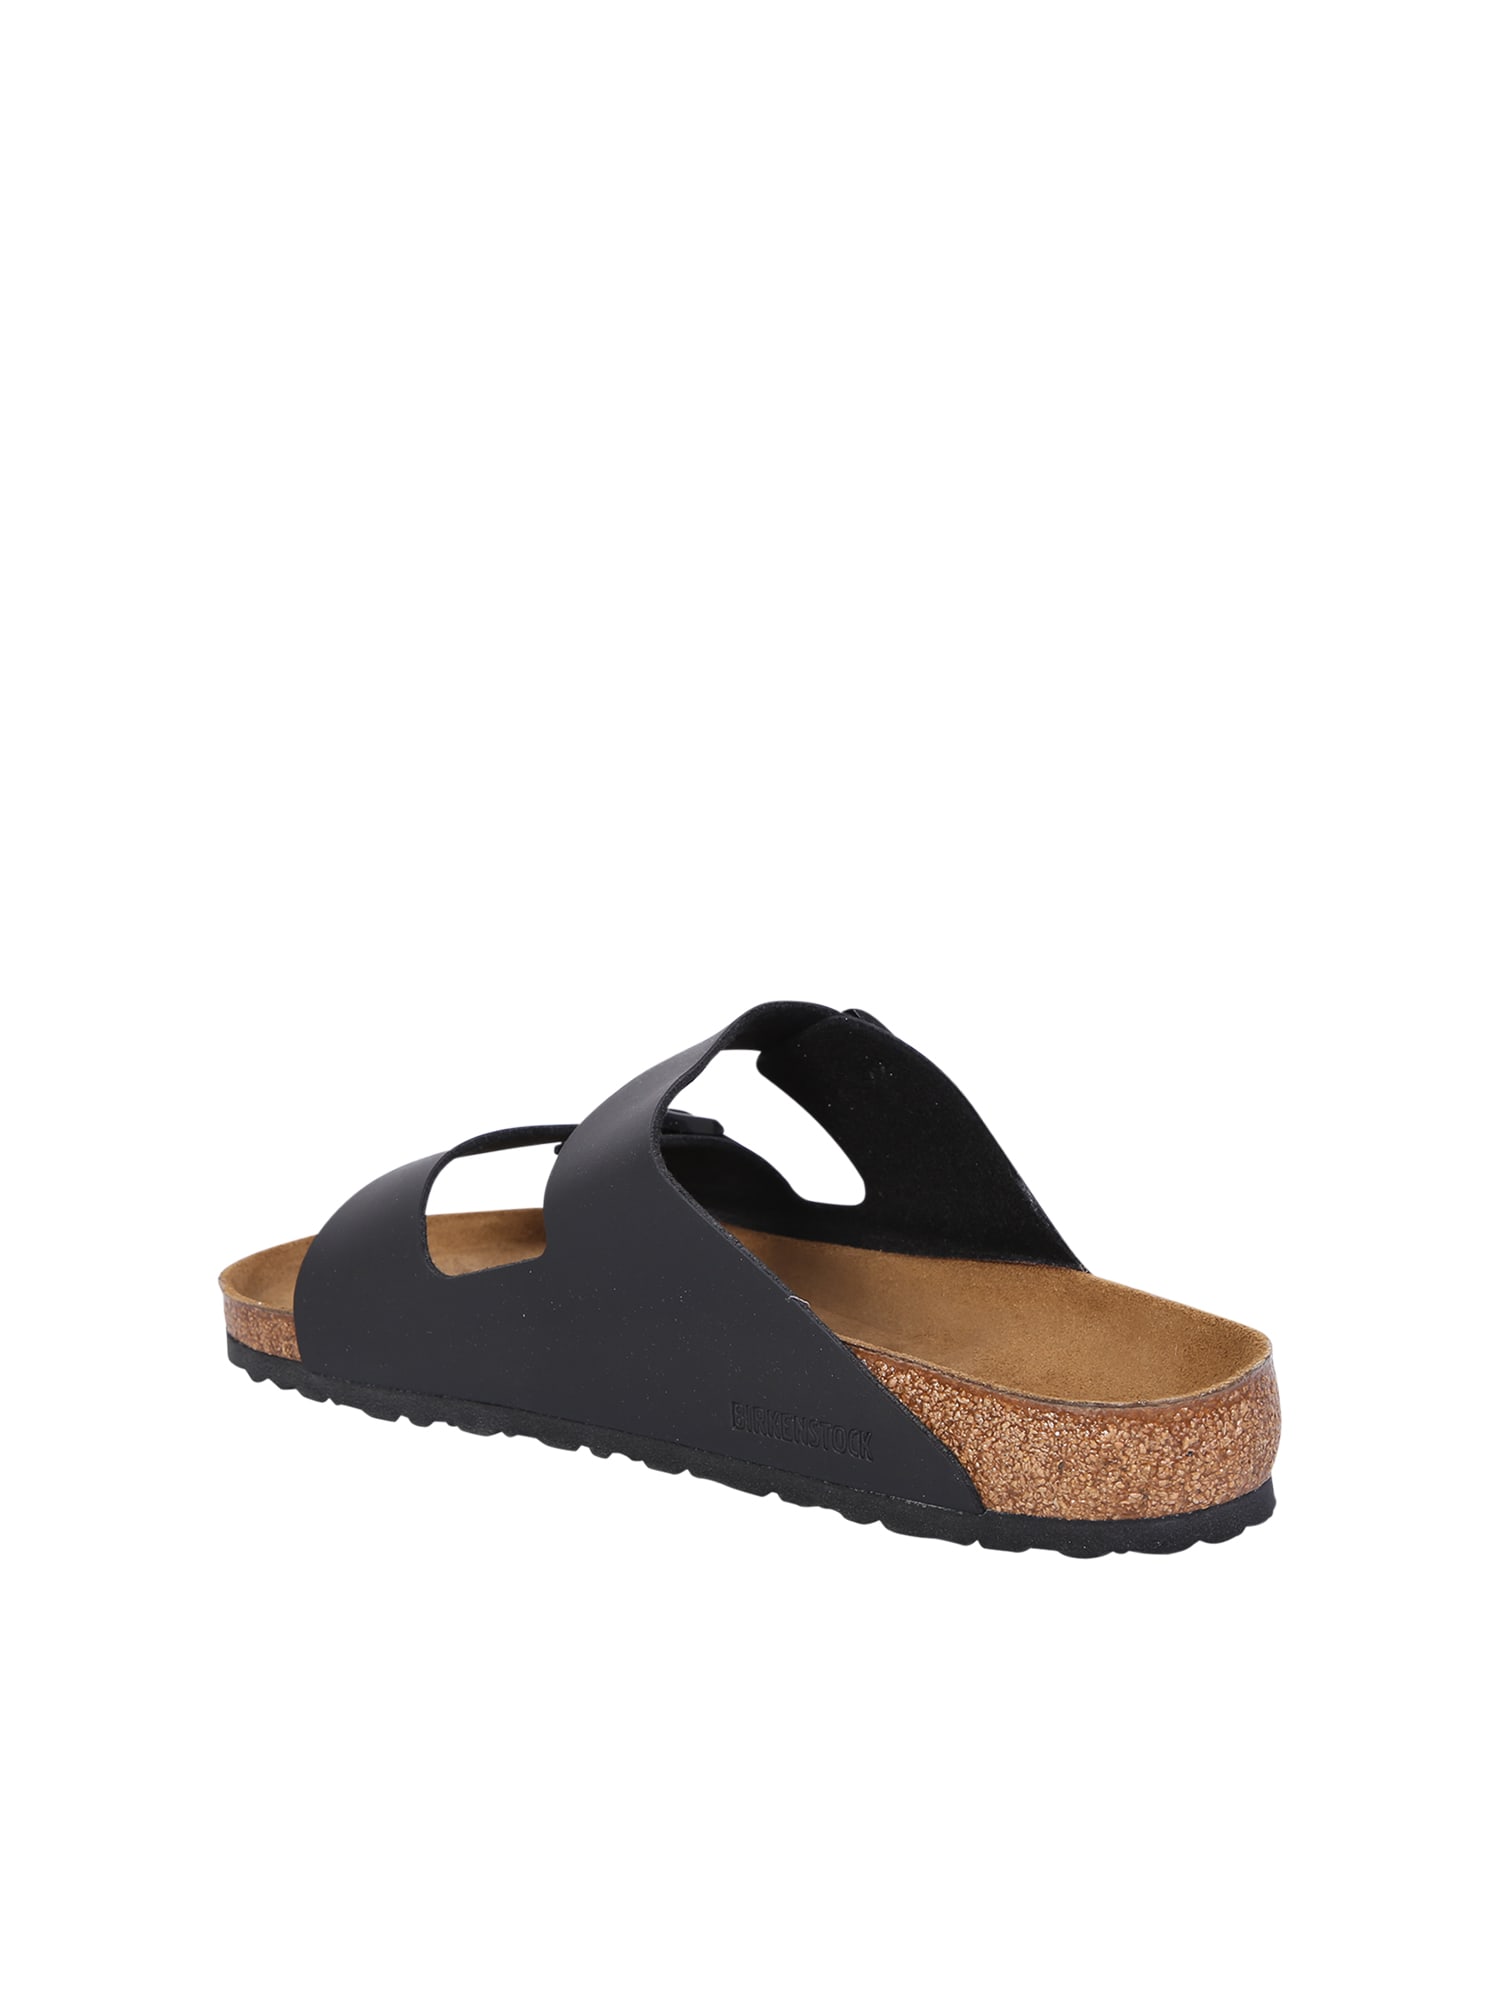 Shop Birkenstock Double-strap Black Sandals